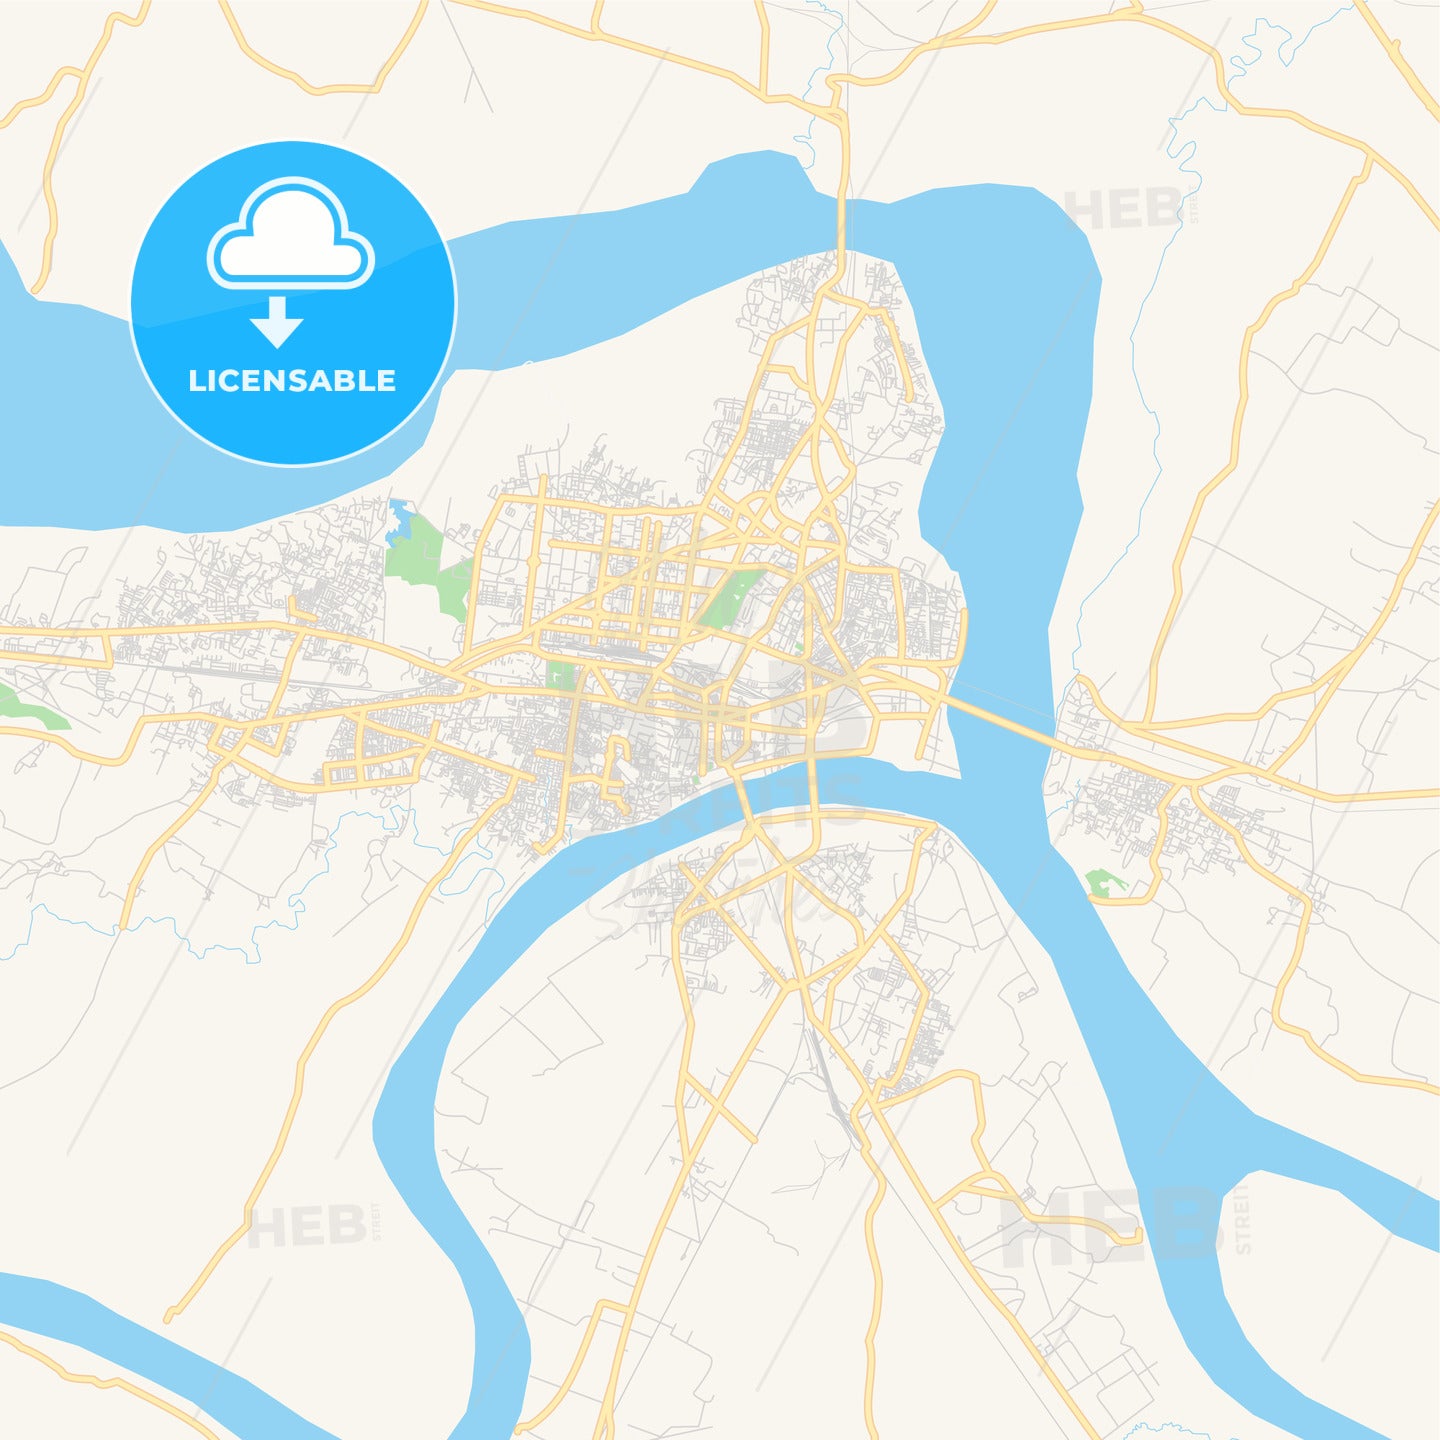 Printable street map of Allahabad, India